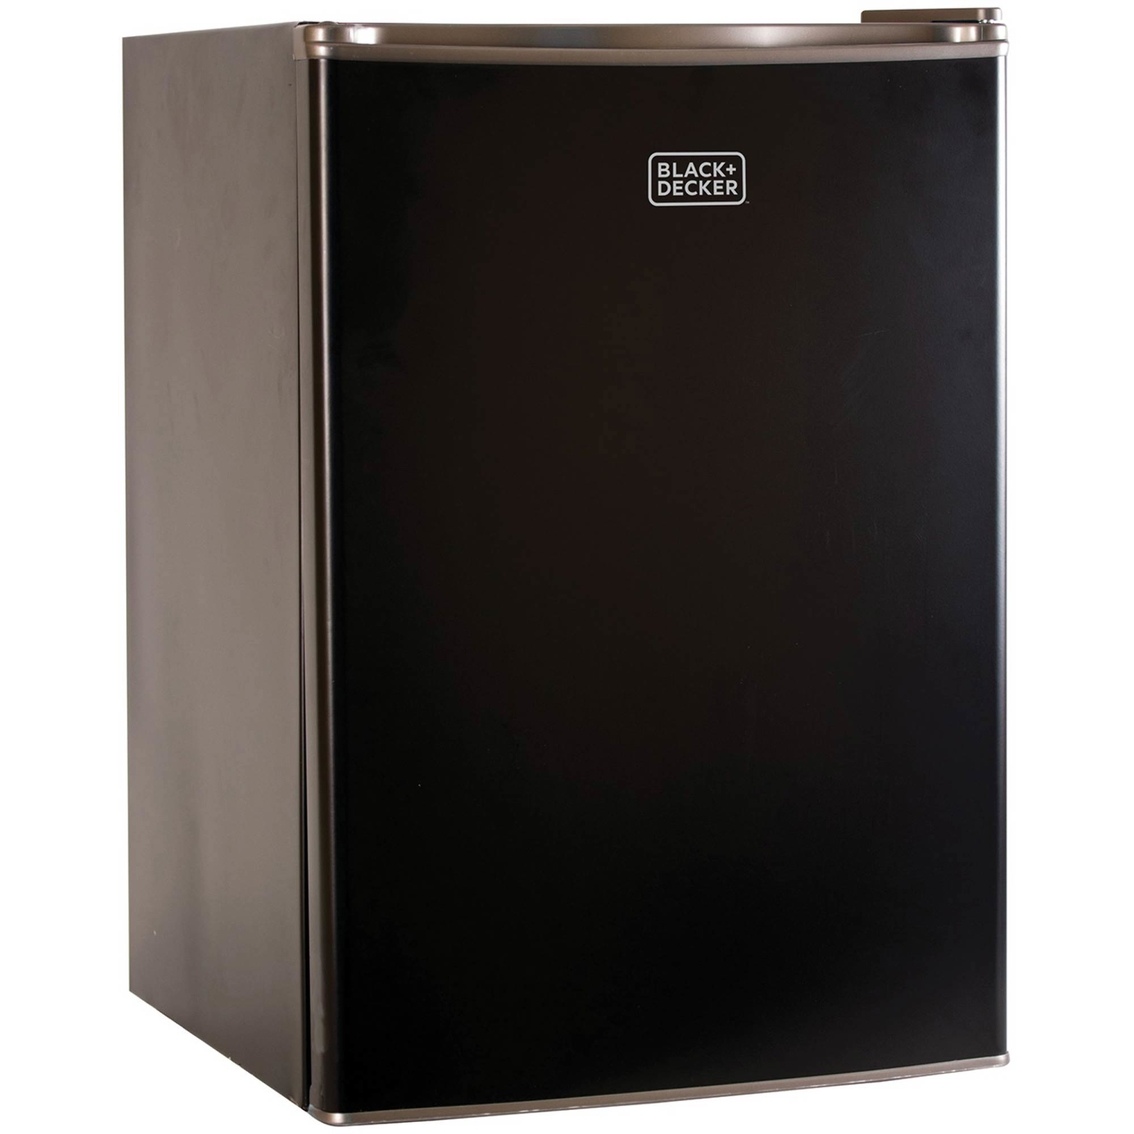 Black + Decker 2.5 cu. ft. Refrigerator/Freezer - Image 2 of 5